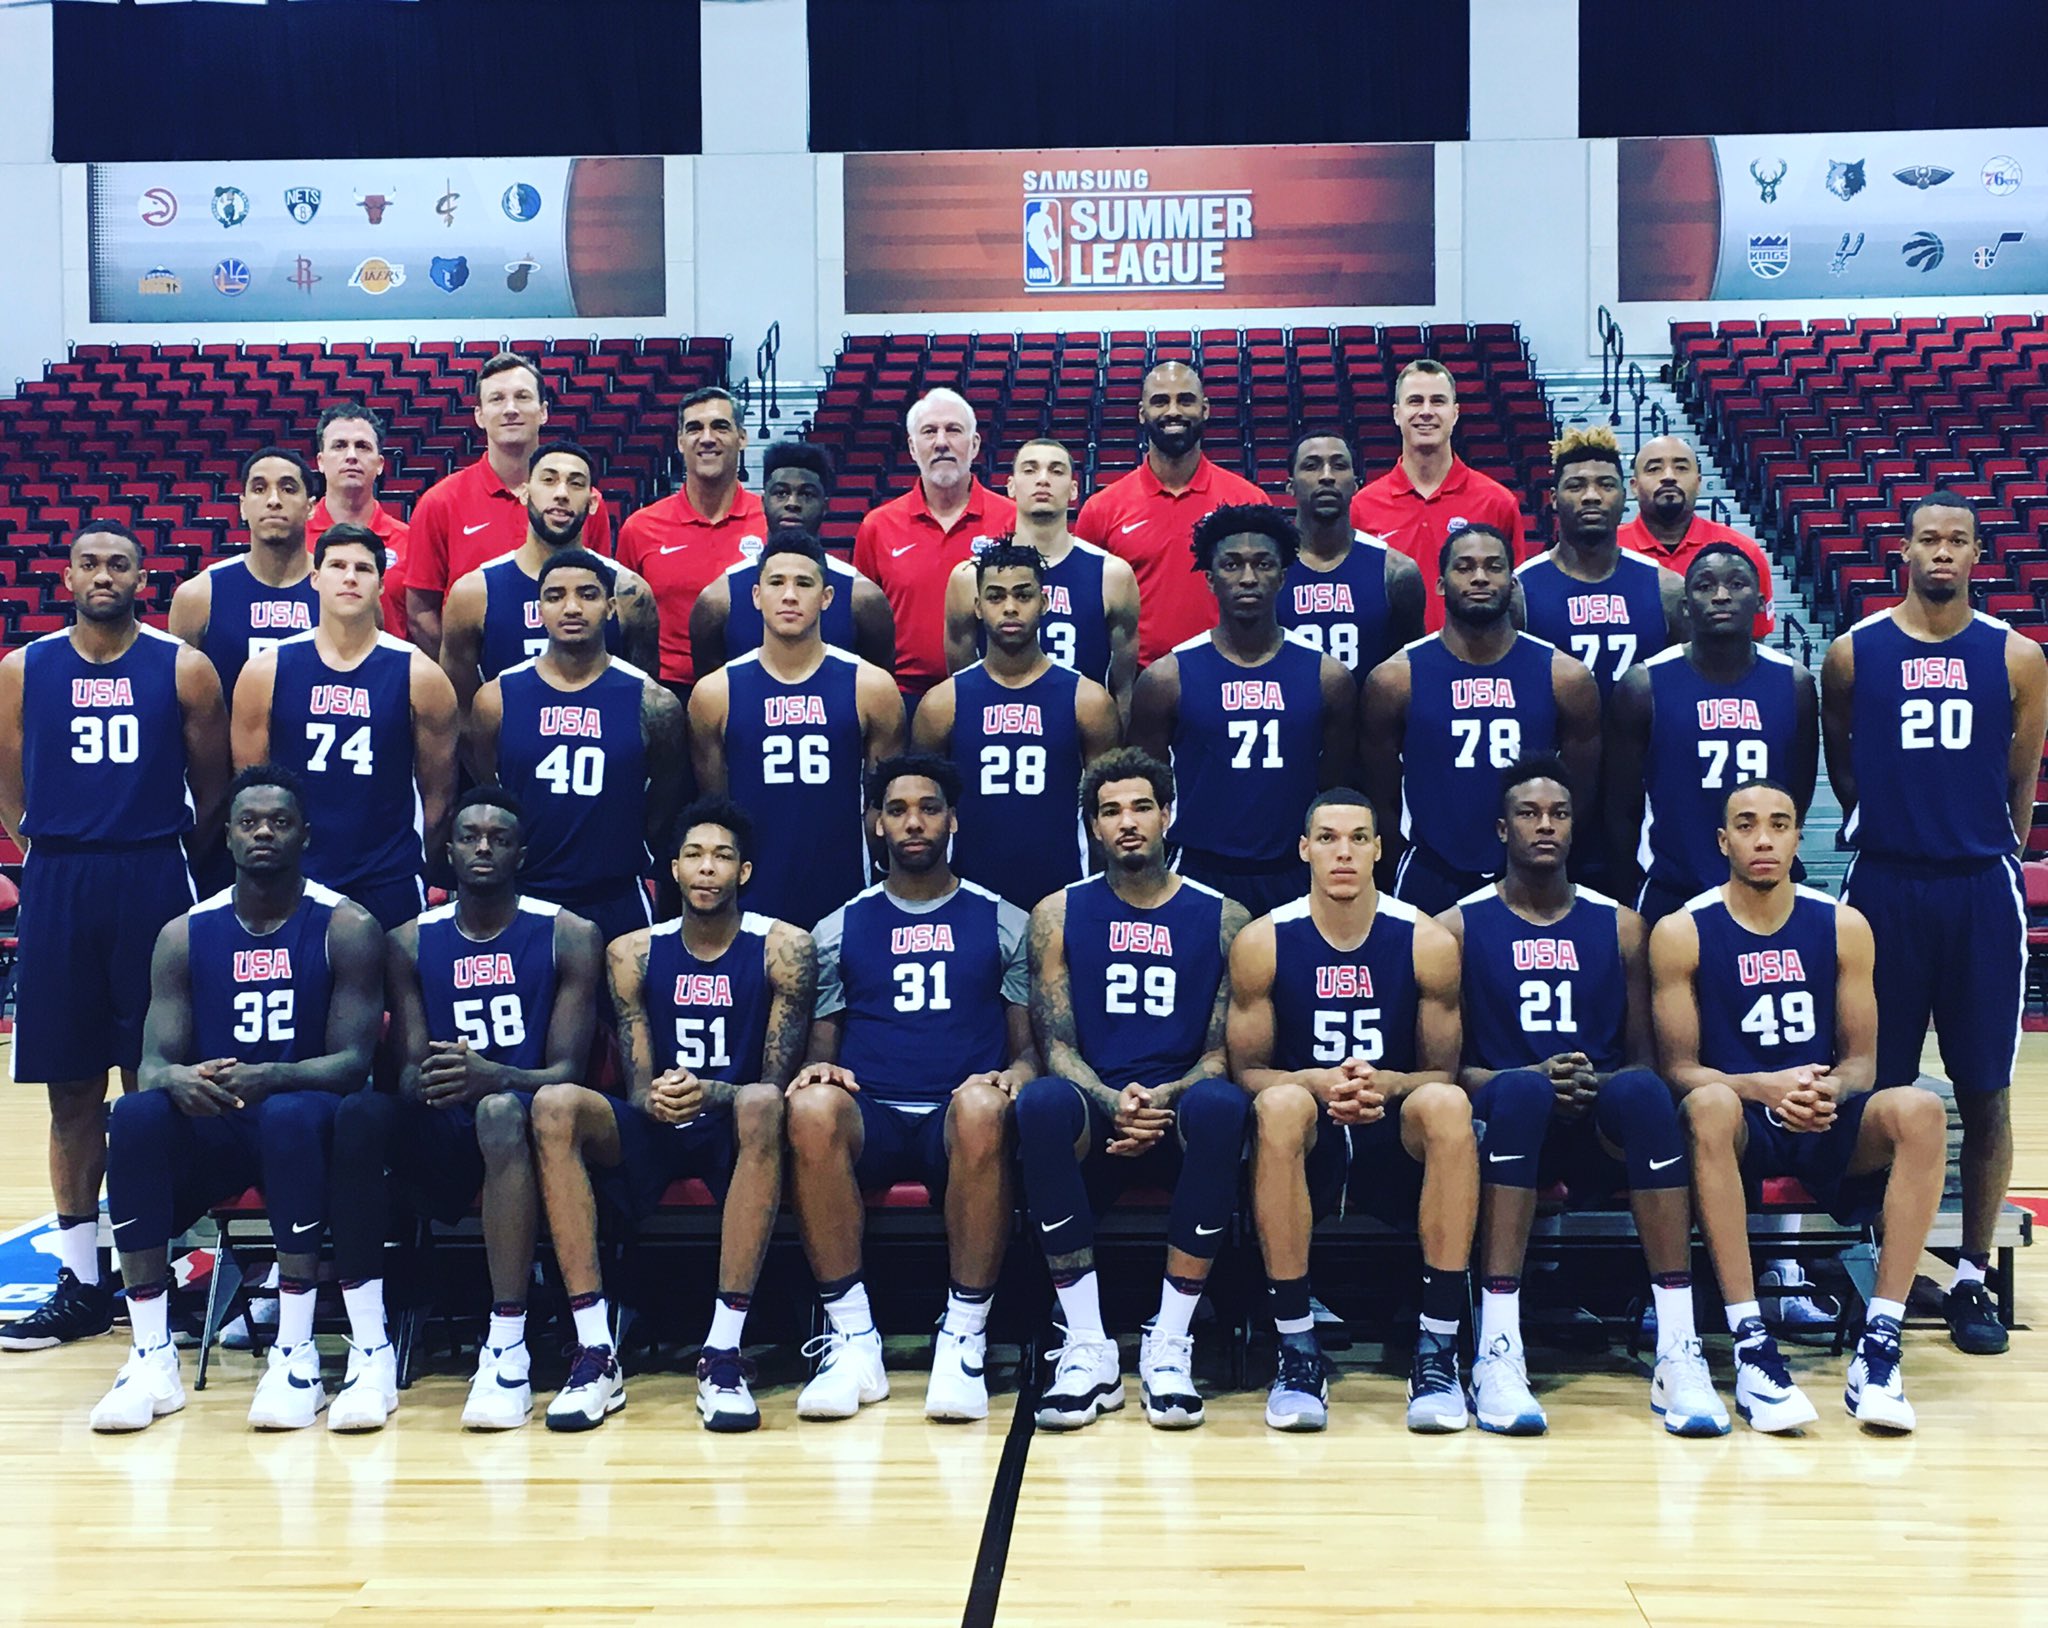 Booker Named to 2016 USA Men's Basketball Select Team